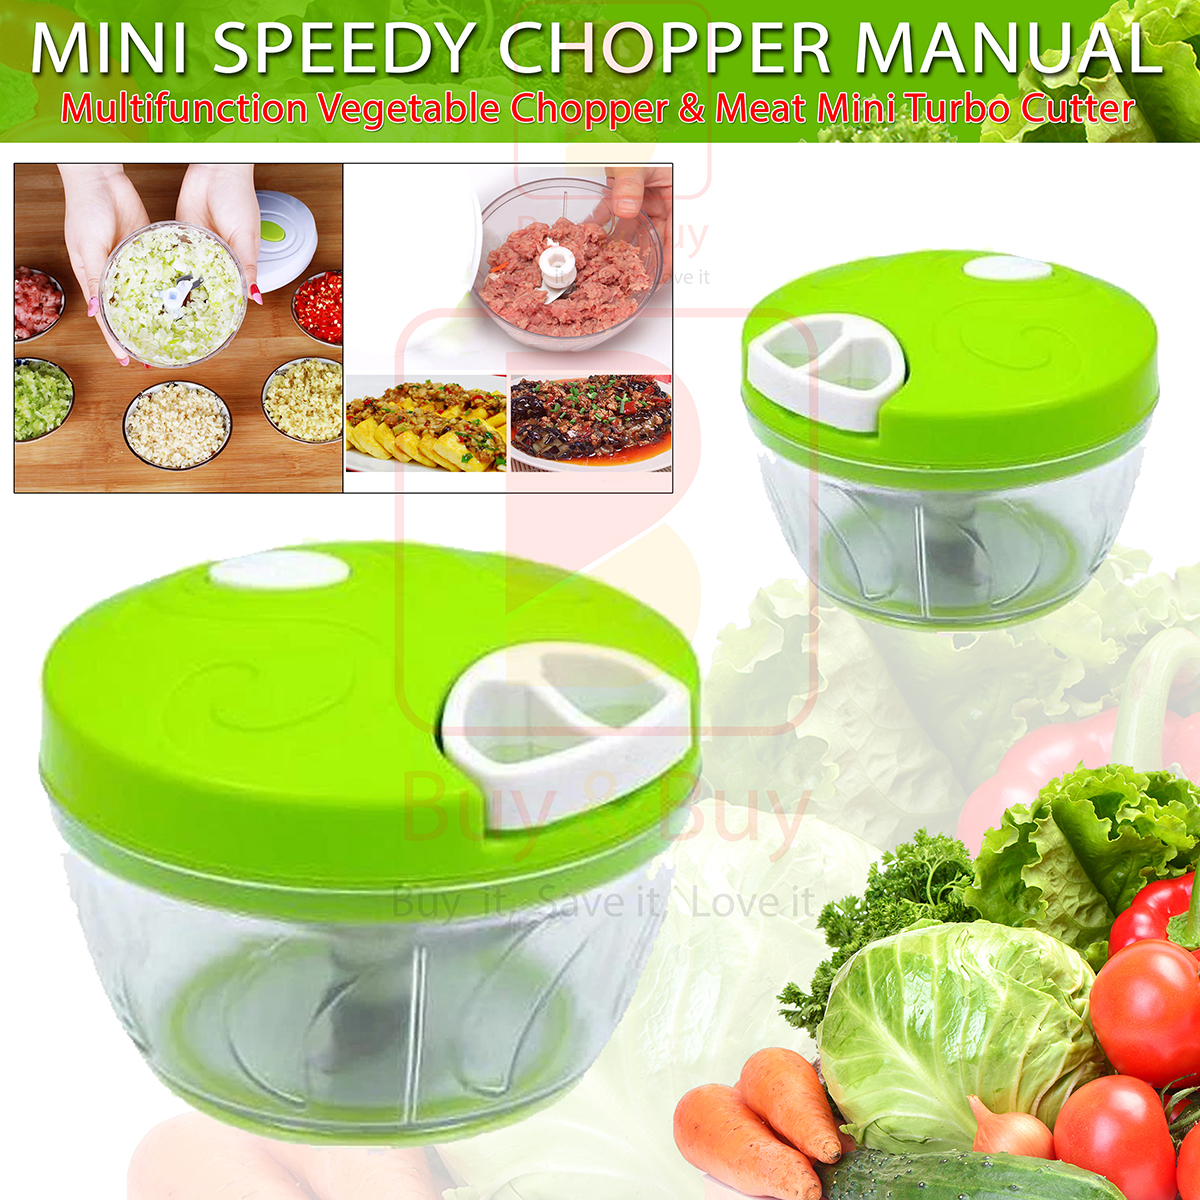 https://www.shoppingpandaa.com/wp-content/uploads/2022/07/Mini-Speedy-Chopper-Manual-Hand-Pull-Vegetable-_-Meat-Mini-Turbo-Cutter.jpg